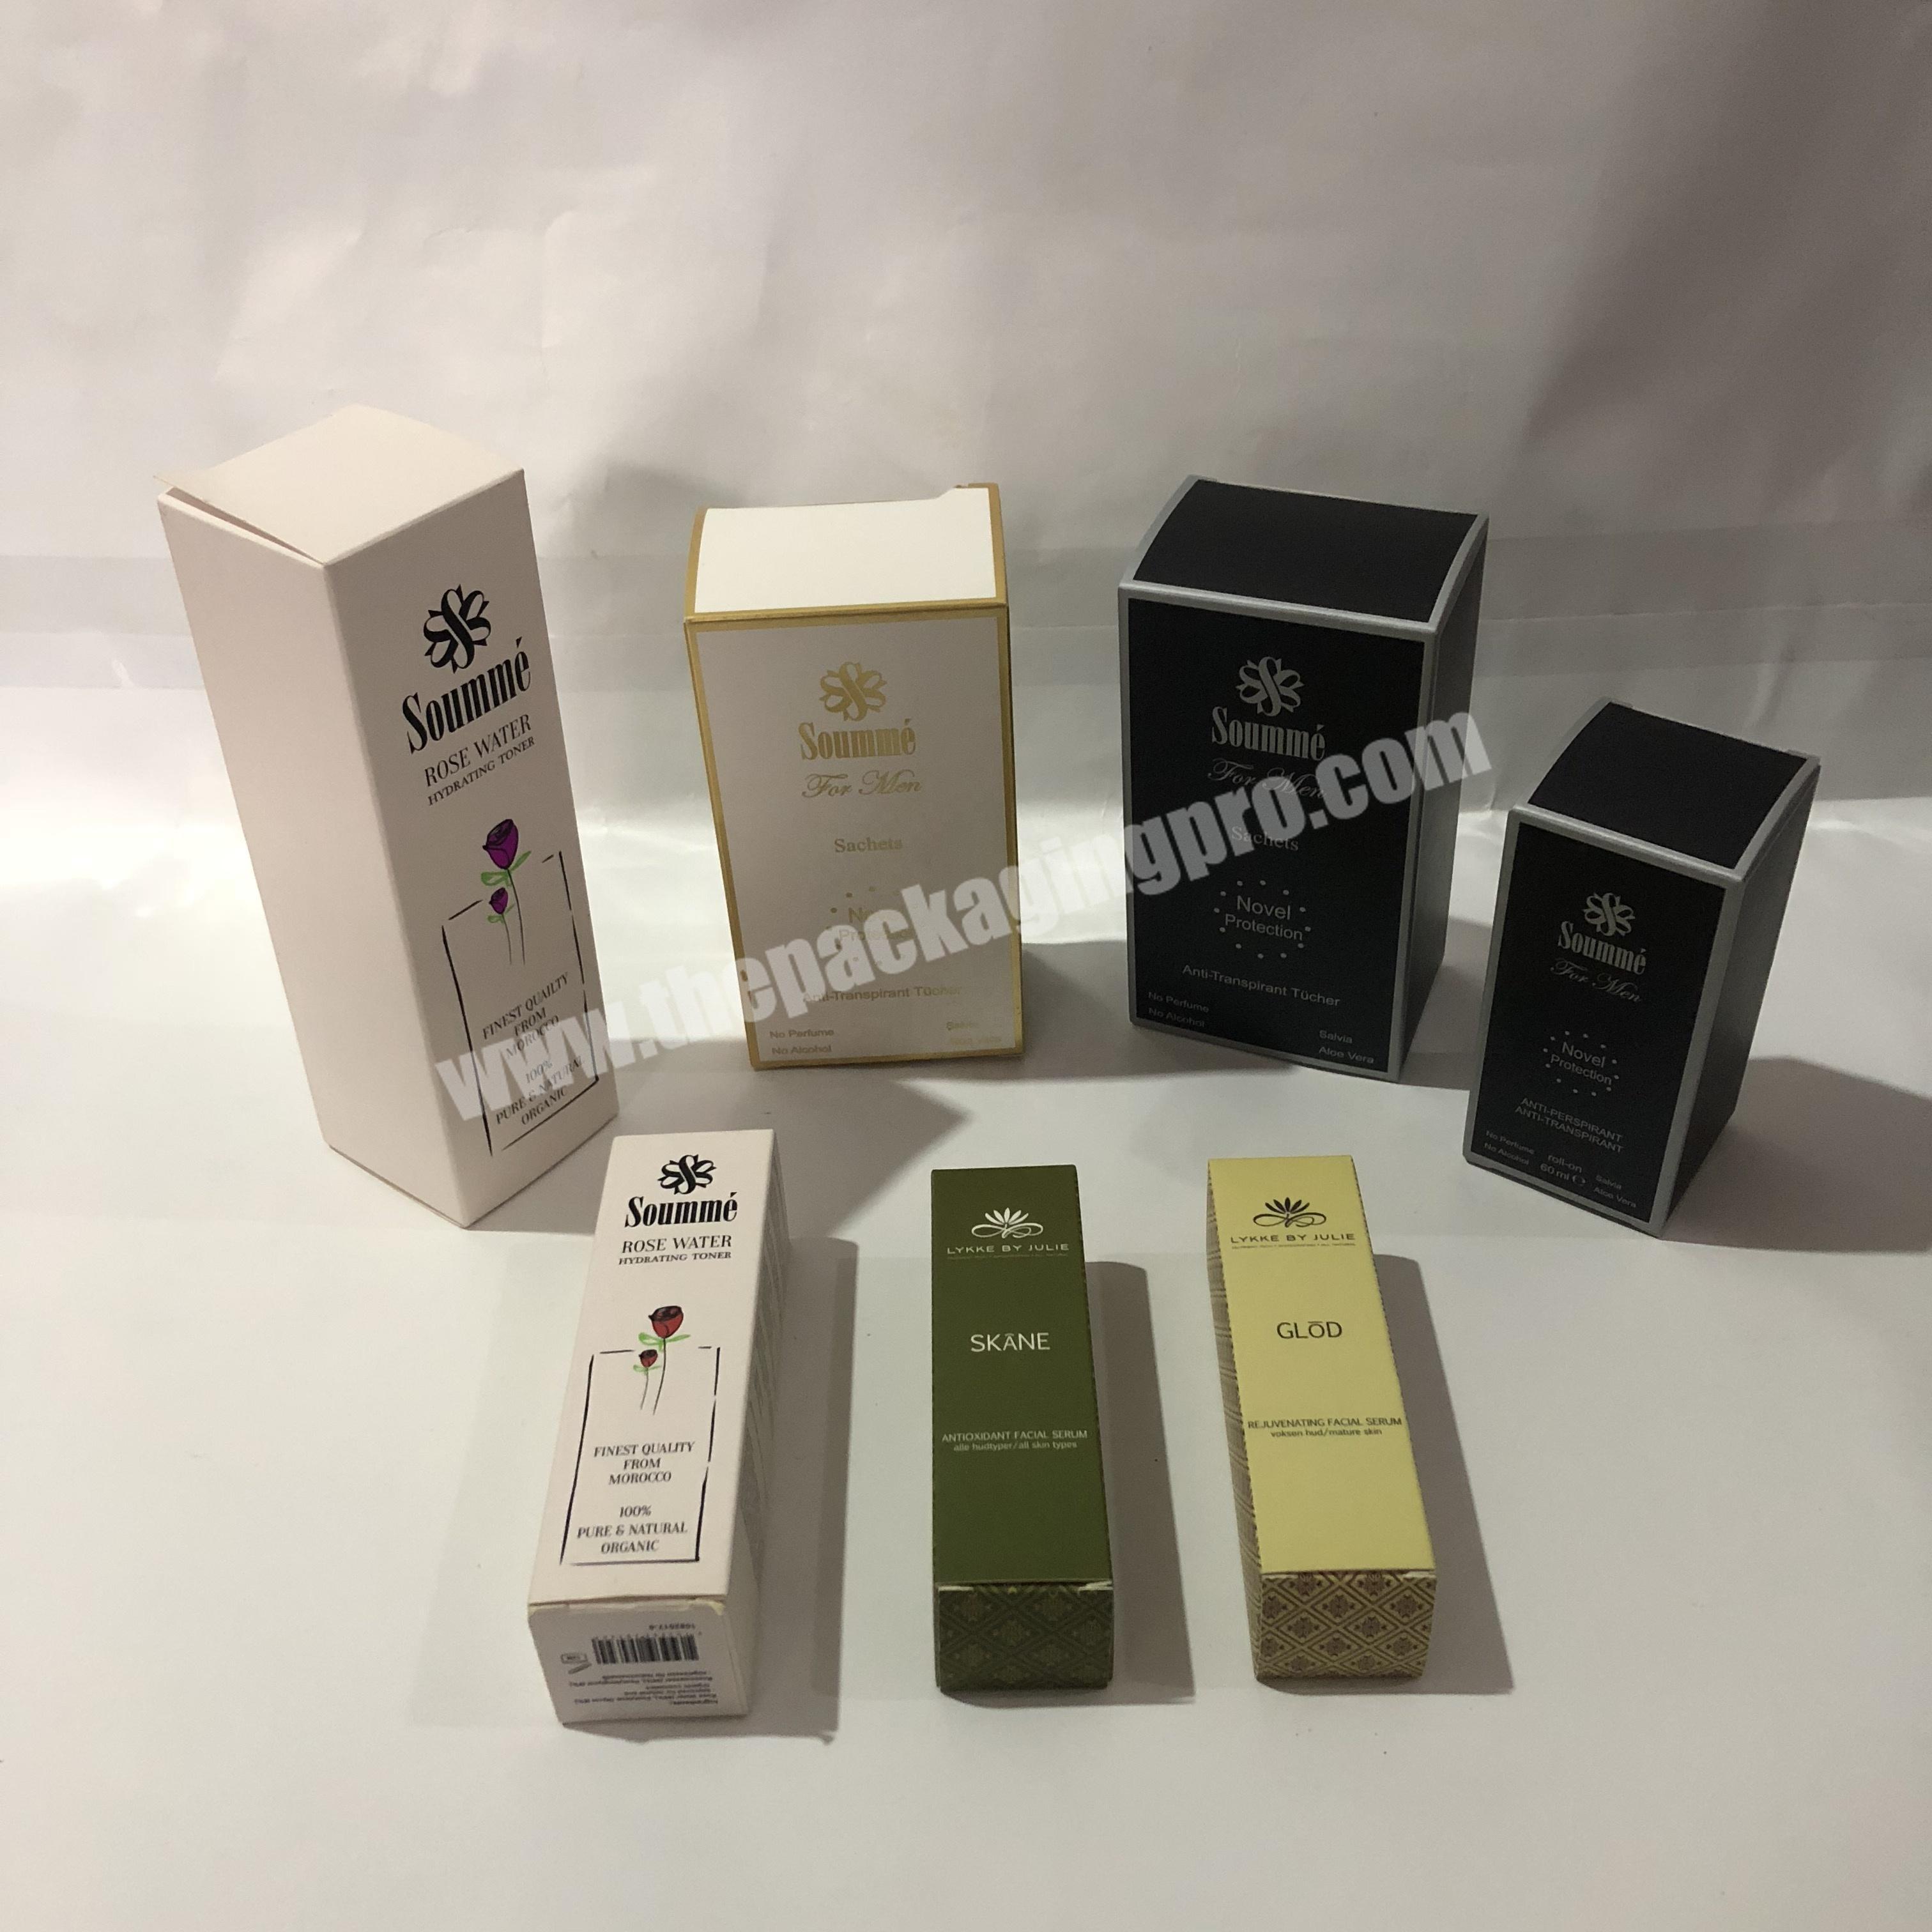 Gold edge design perfume bottle packing boxes